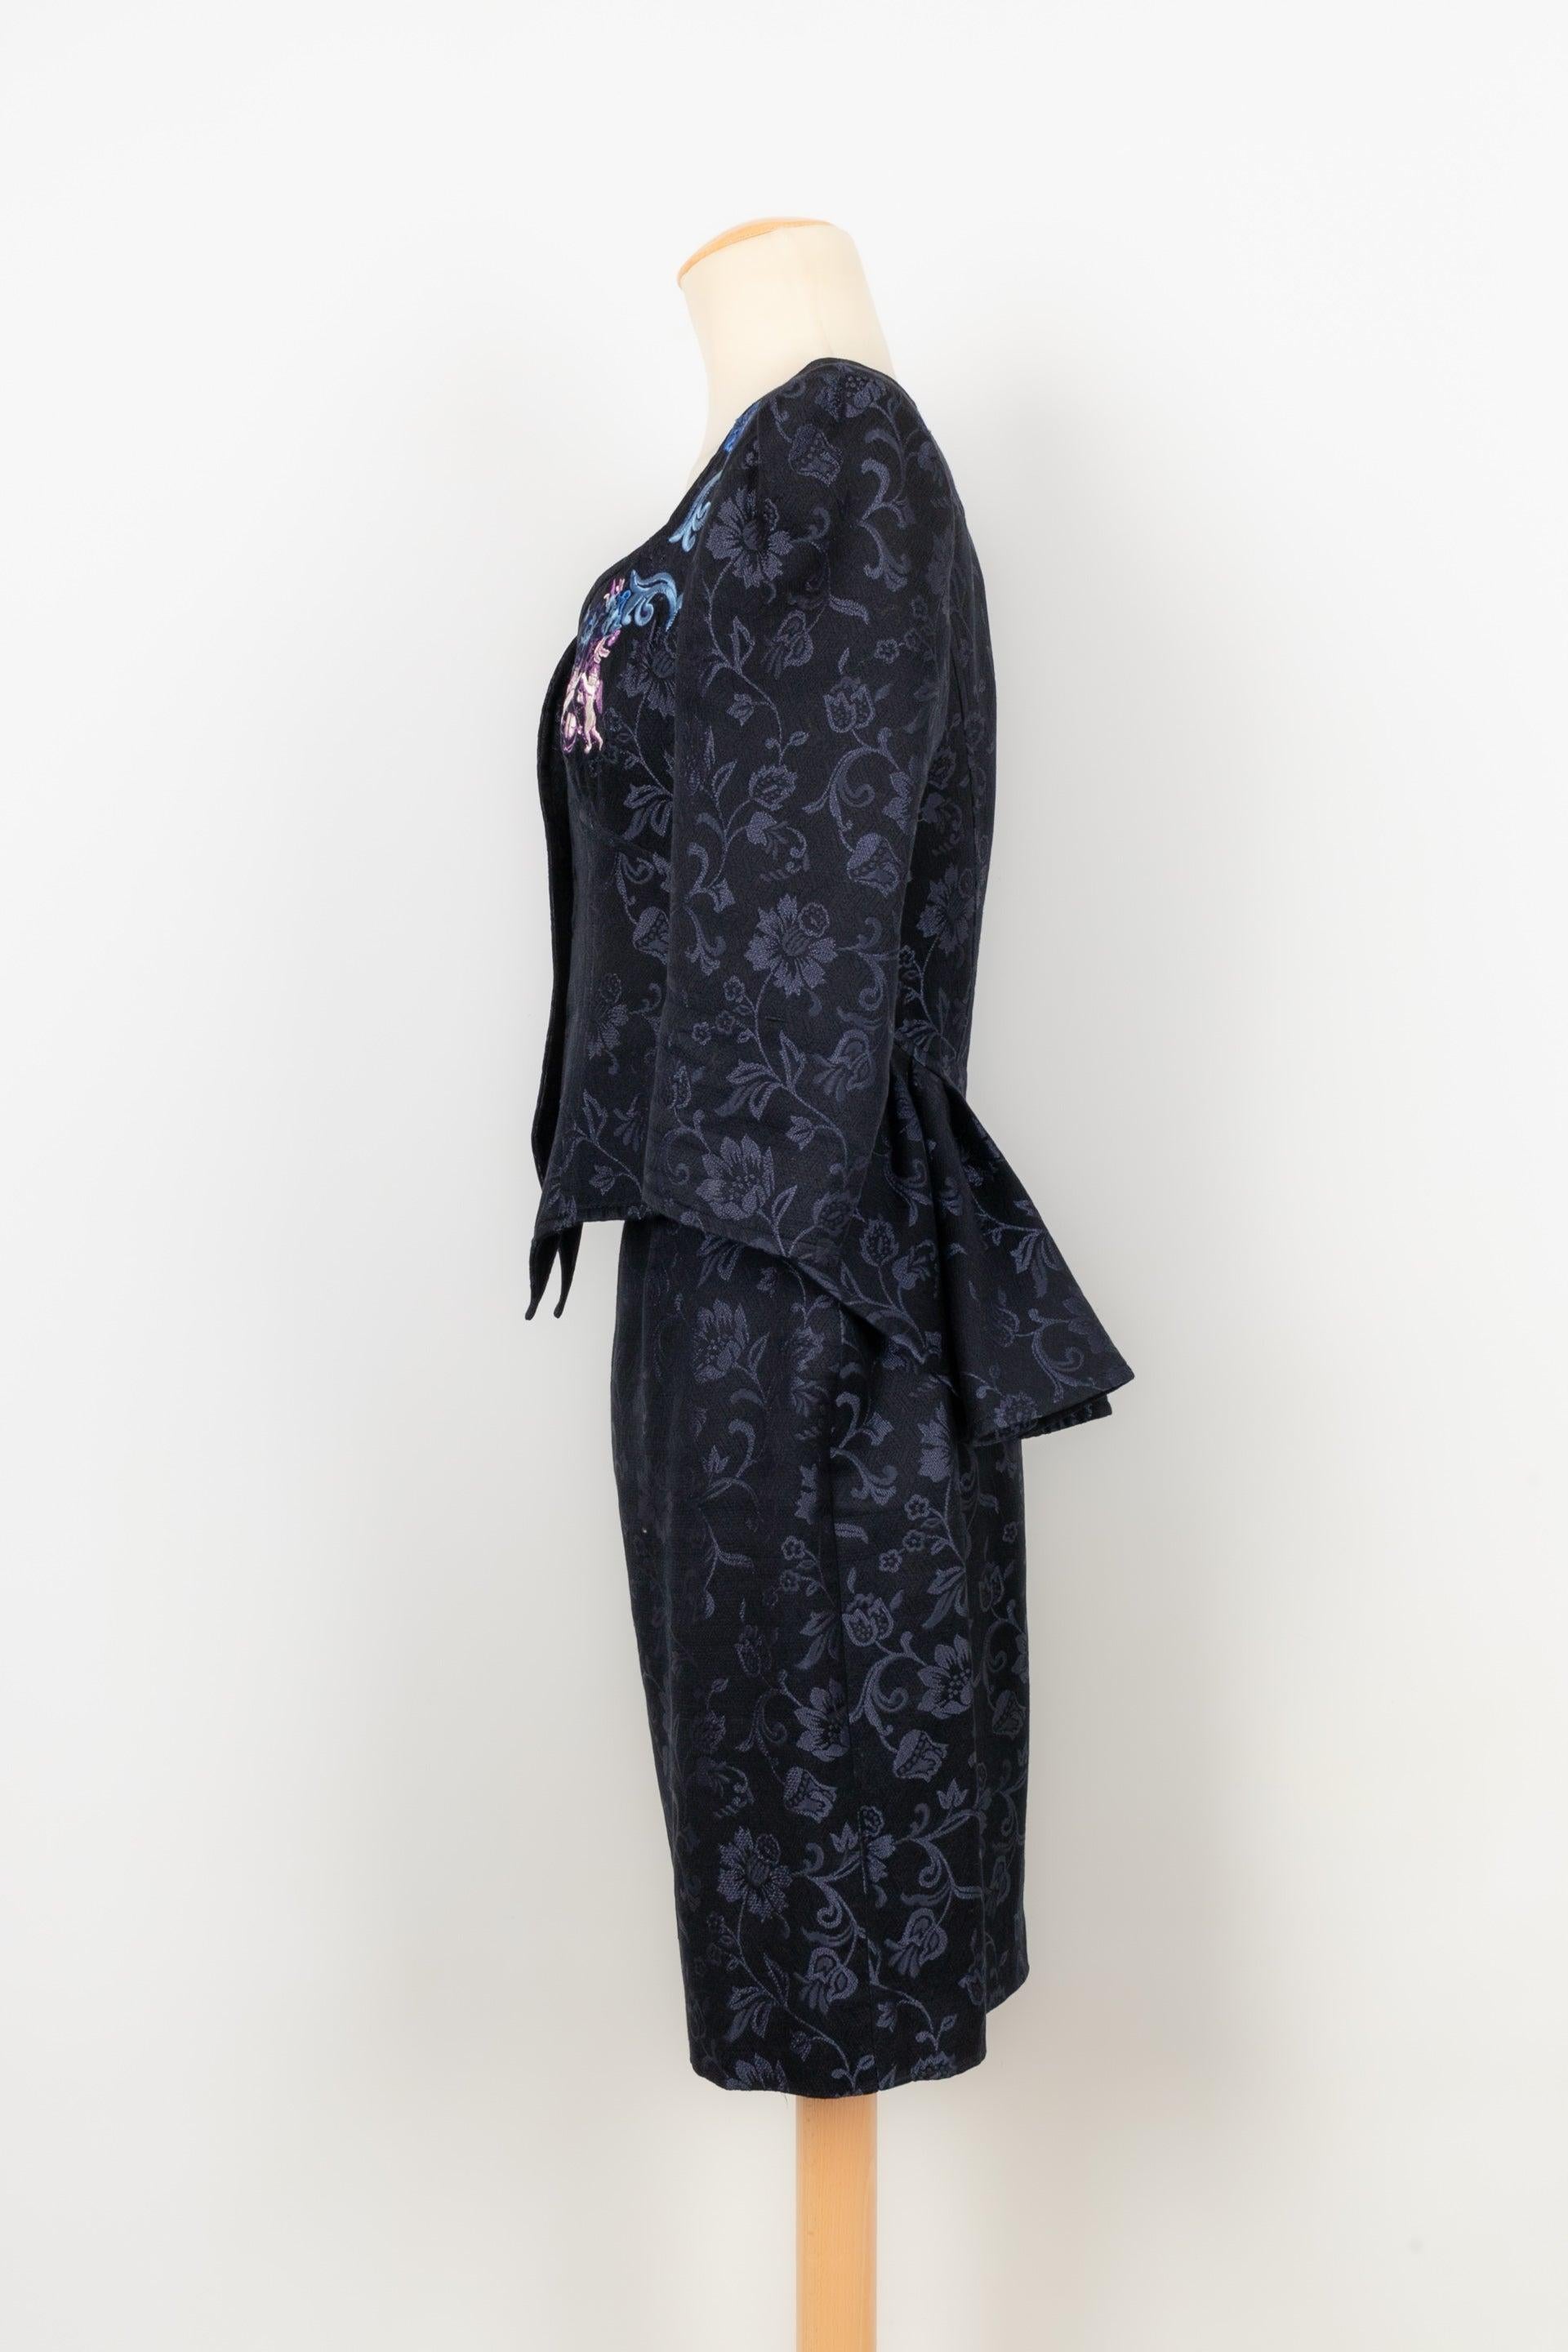 Christian Lacroix - (Made in France) Blue skirt suit set. Size  38FR.

Additional information:
Condition: Very good condition
Dimensions: Jacket: Shoulder width: 41 cm - Sleeve length: 45 cm - Length: 55 cm 
Skirt: Waist: 33 cm - Length: 56